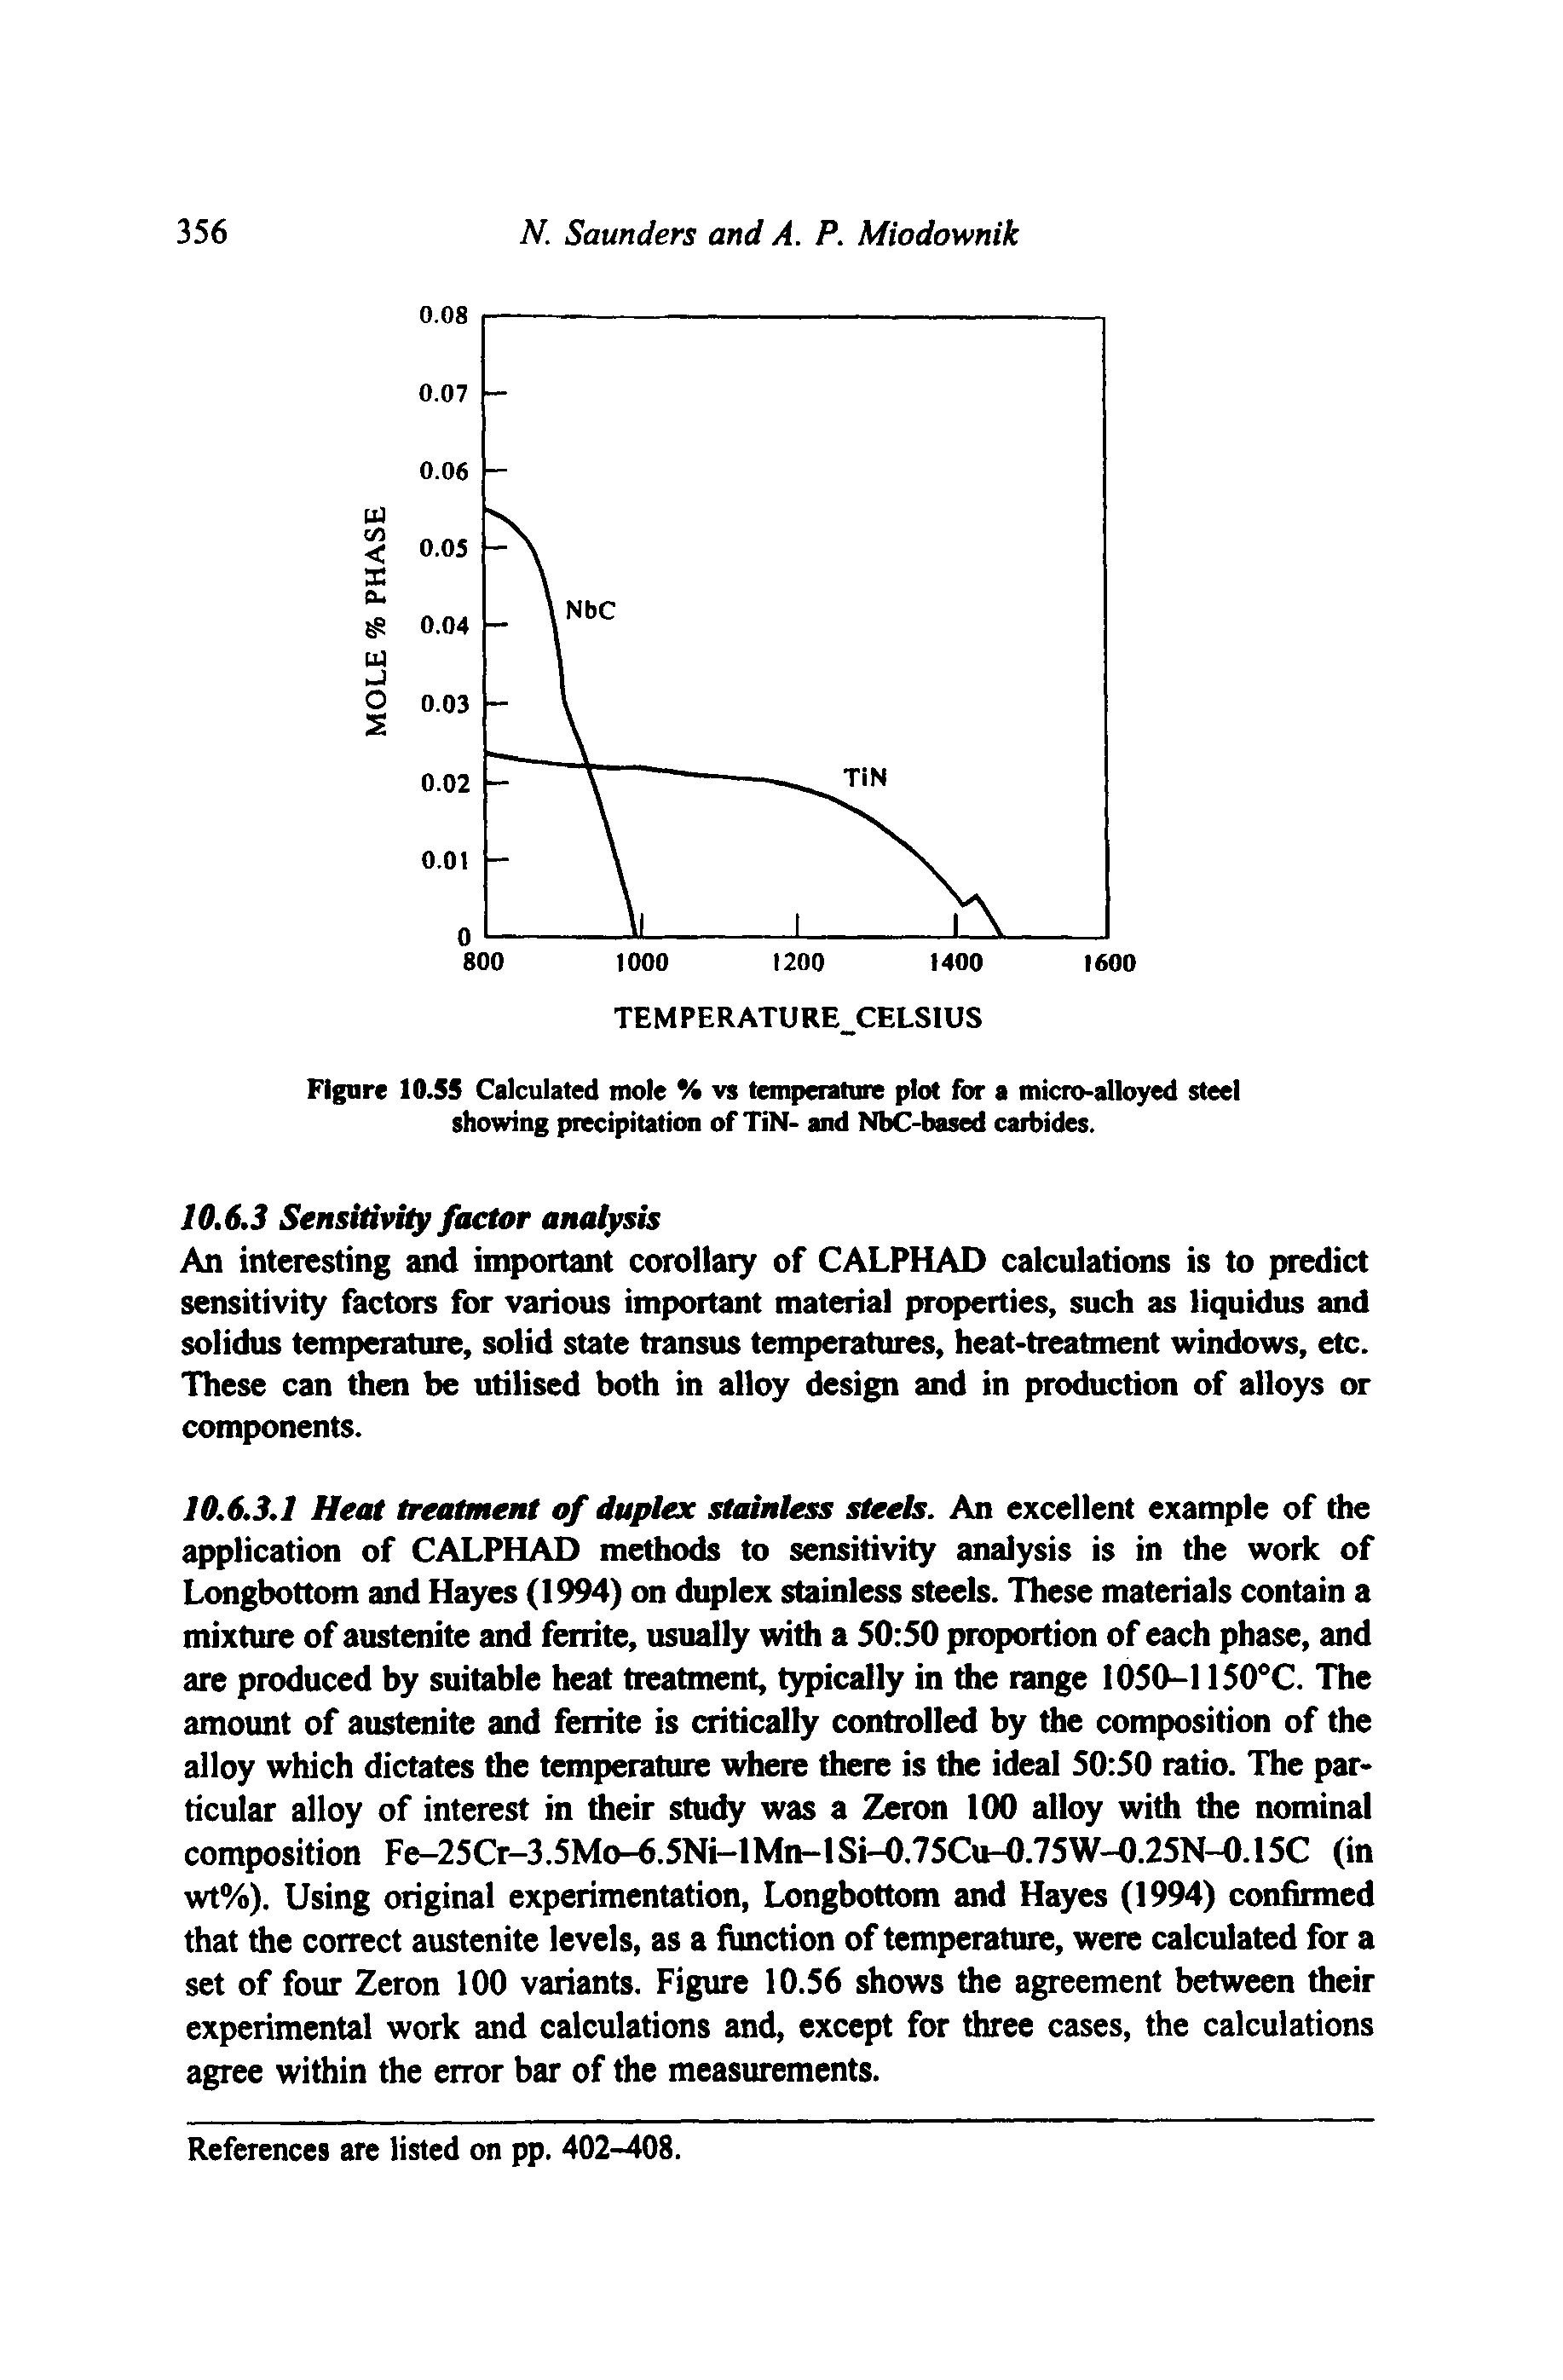 Figure 10.55 Calculated mole % vs temperature plot for a micro-alloyed steel showing precipitation of TiN- and NbC-based carbides.